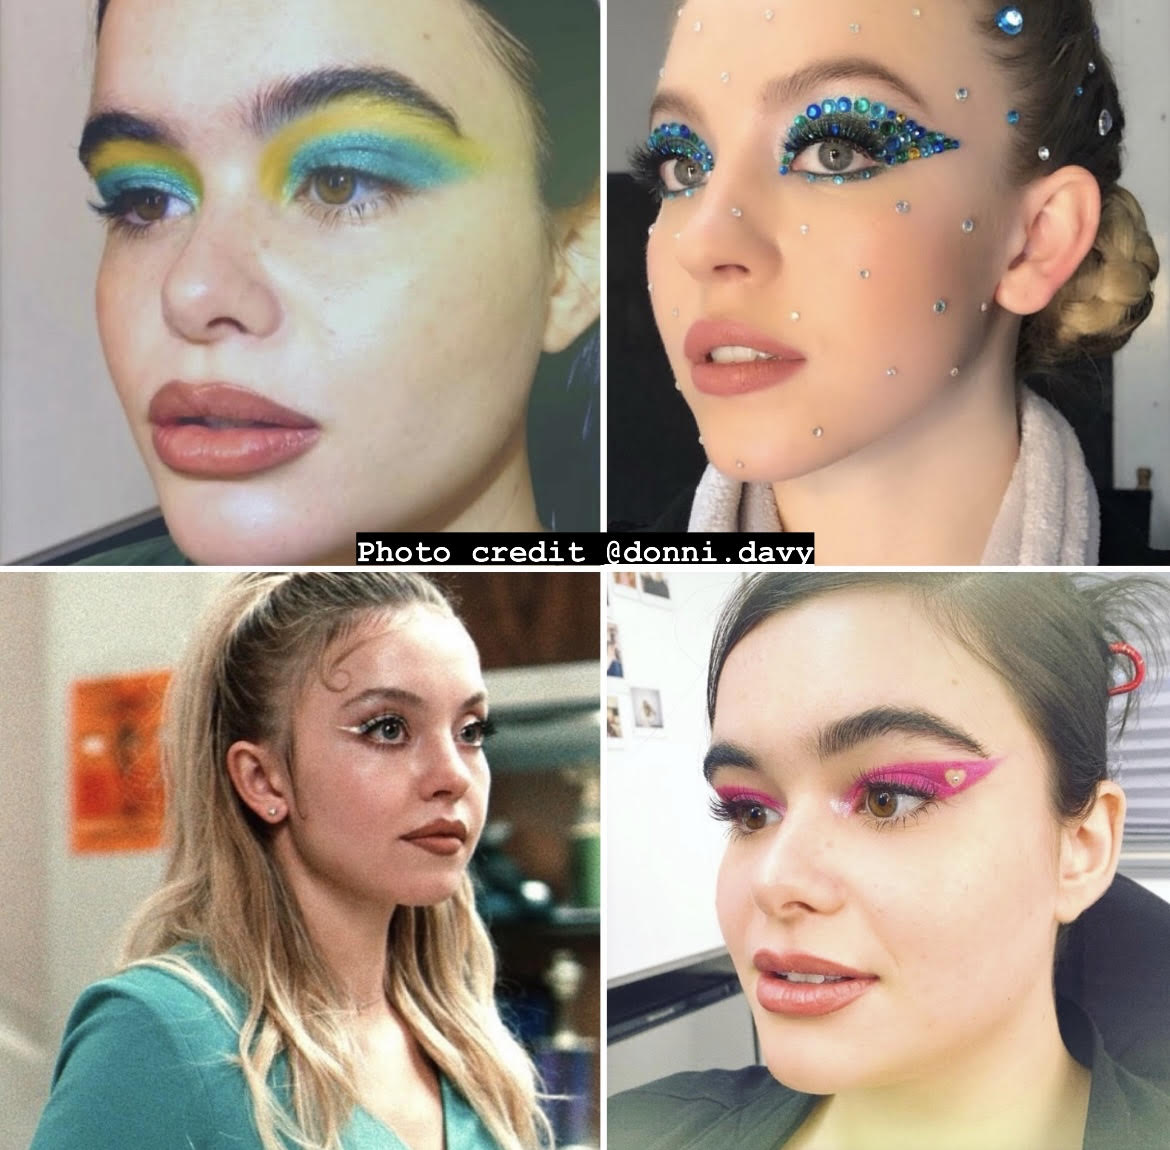 Maddy Euphoria Makeup: How To Get Her New Year's Eve Makeup Look